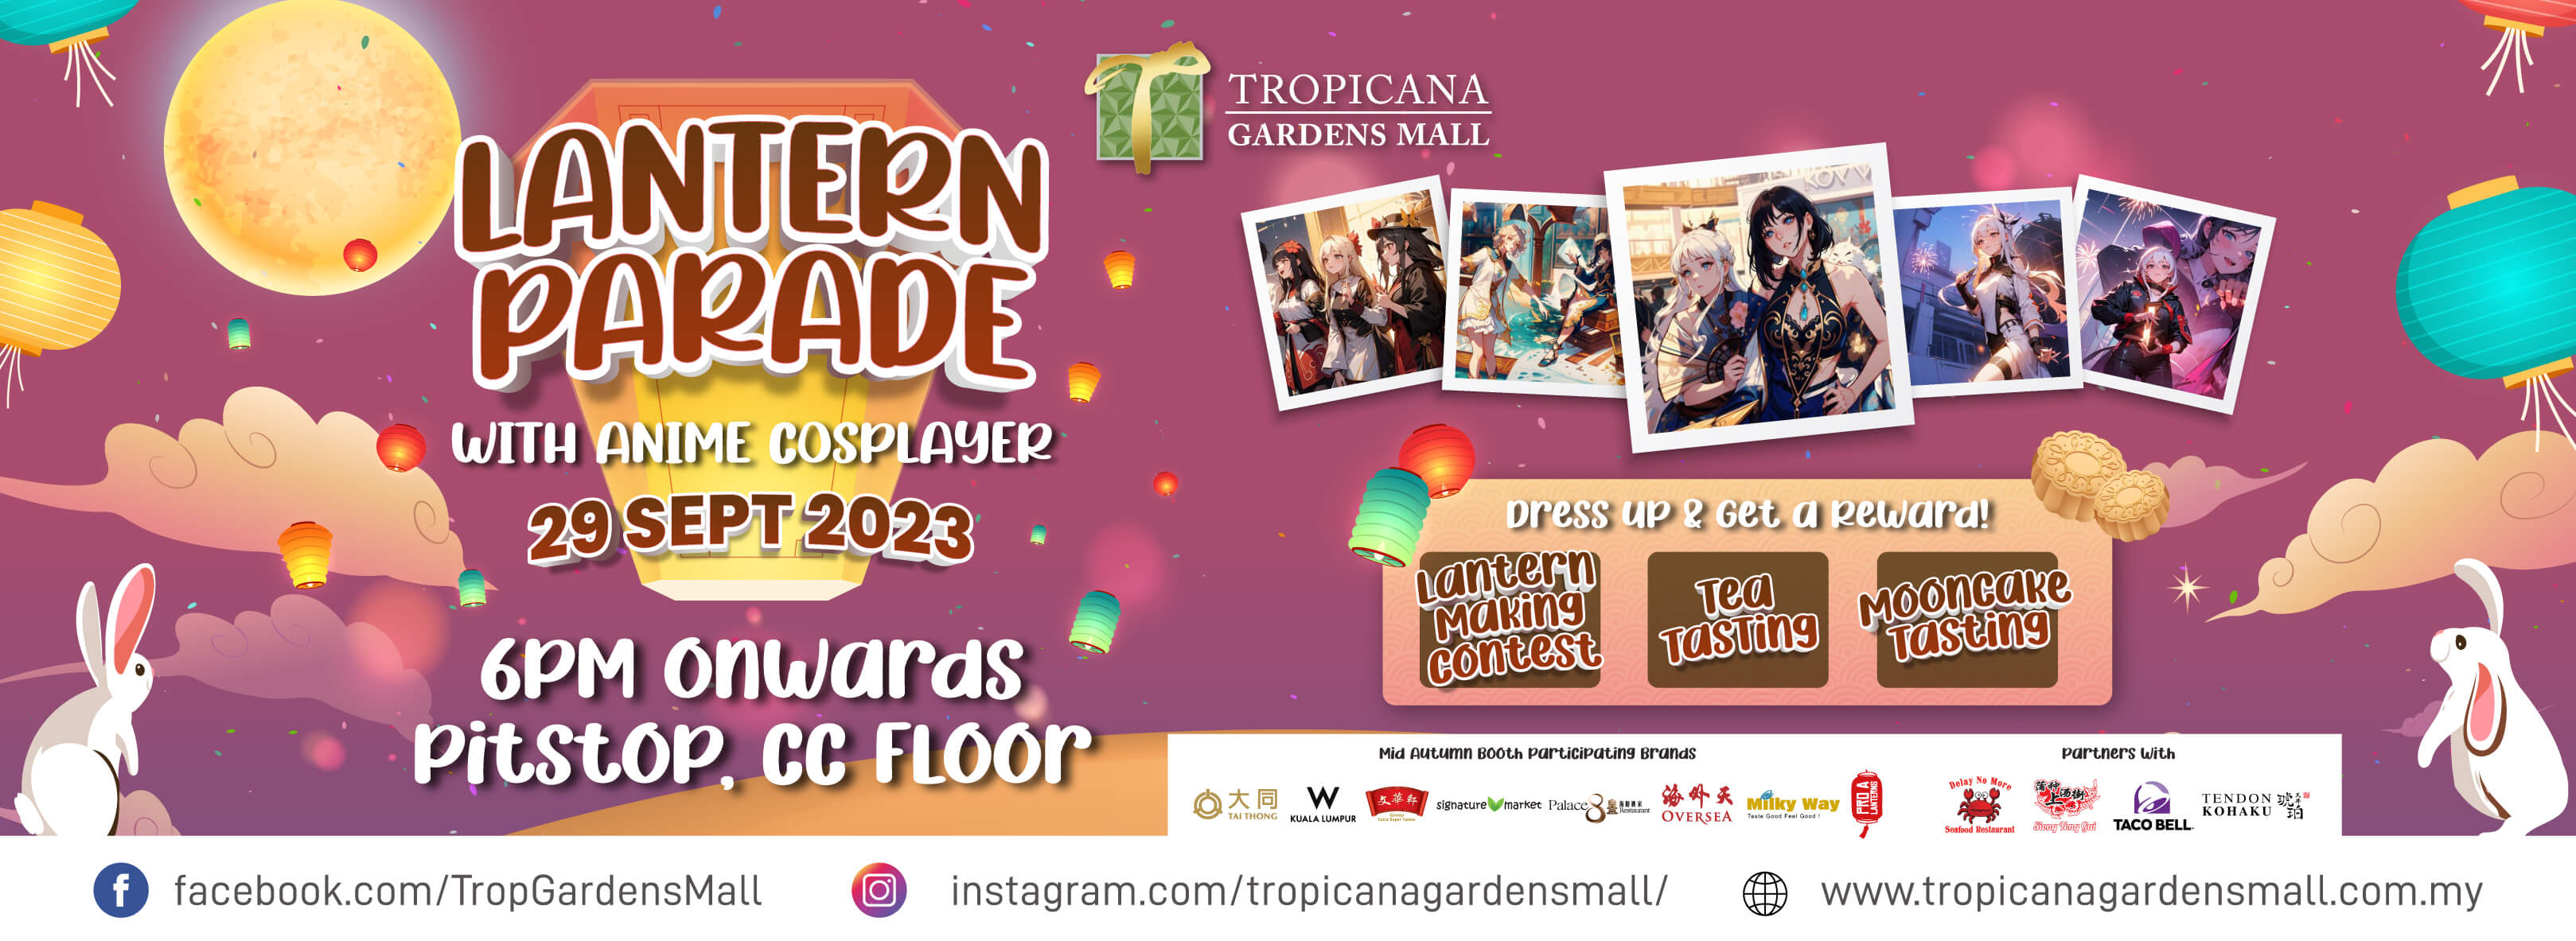 Tropicana Gardens Mall Mid Autumn Lantern Parade